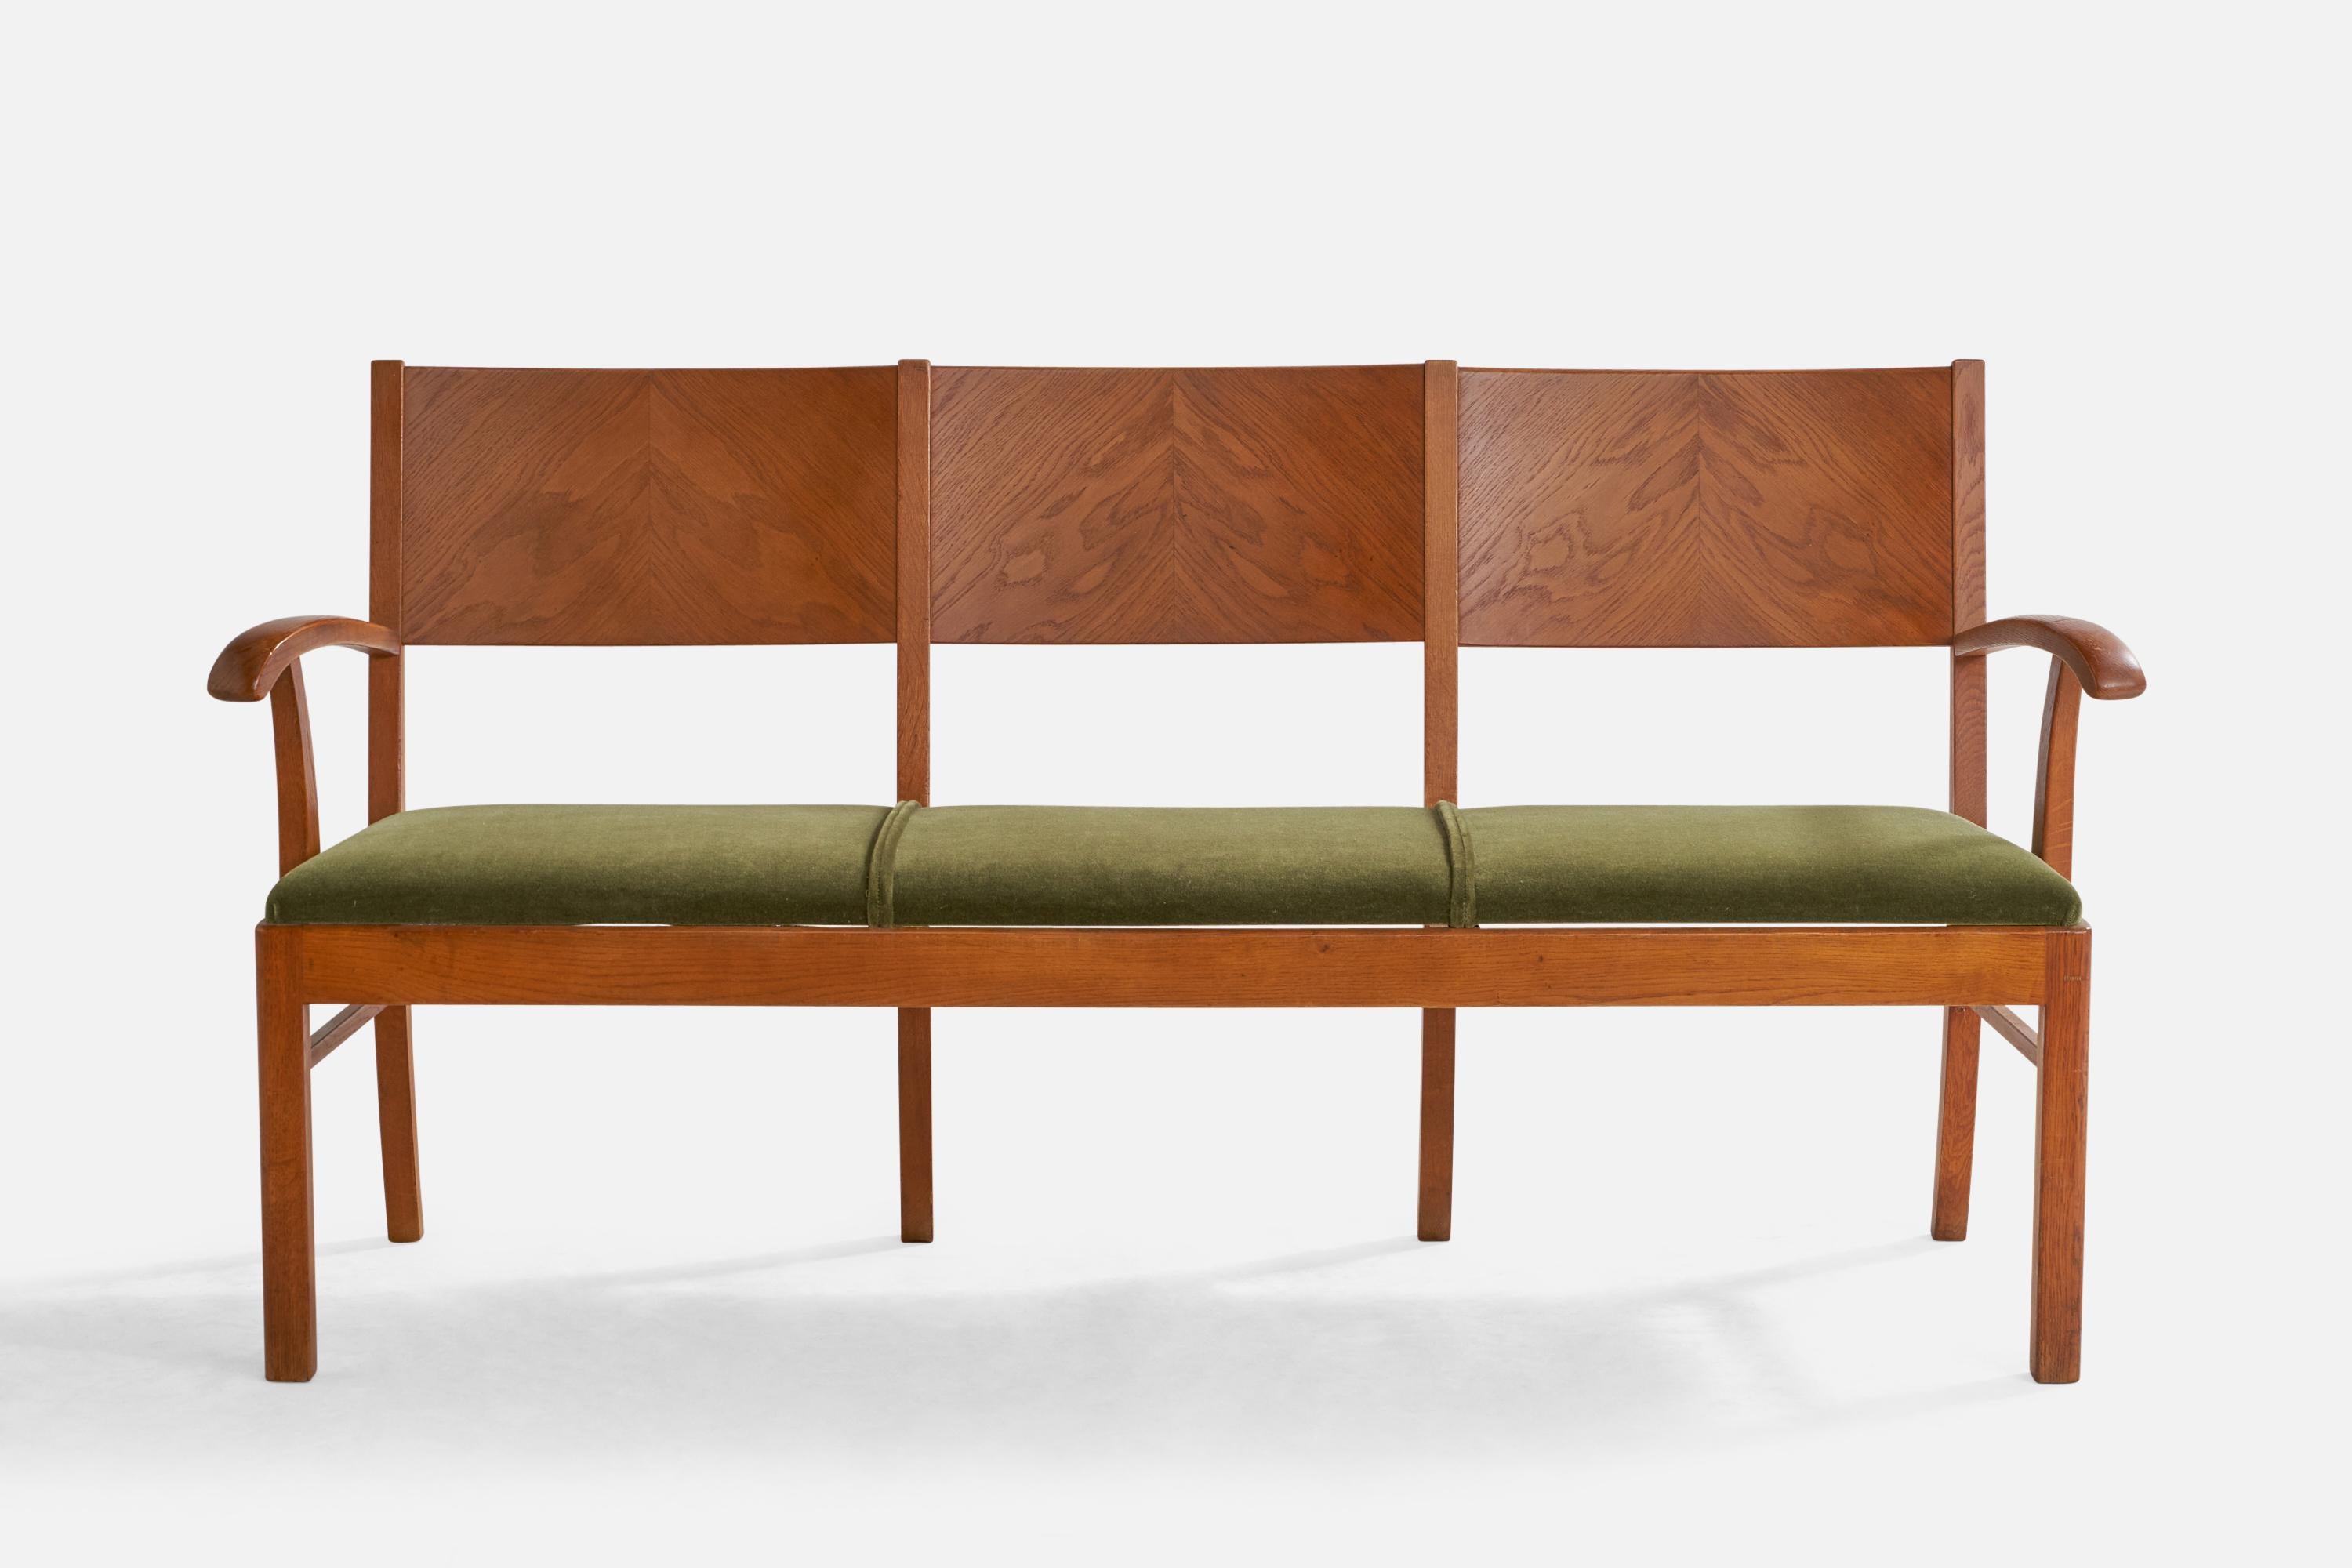 An oak and green mohair fabric bench designed by Søren Hansen, Denmark, 1950s.

Seat height: 18”
